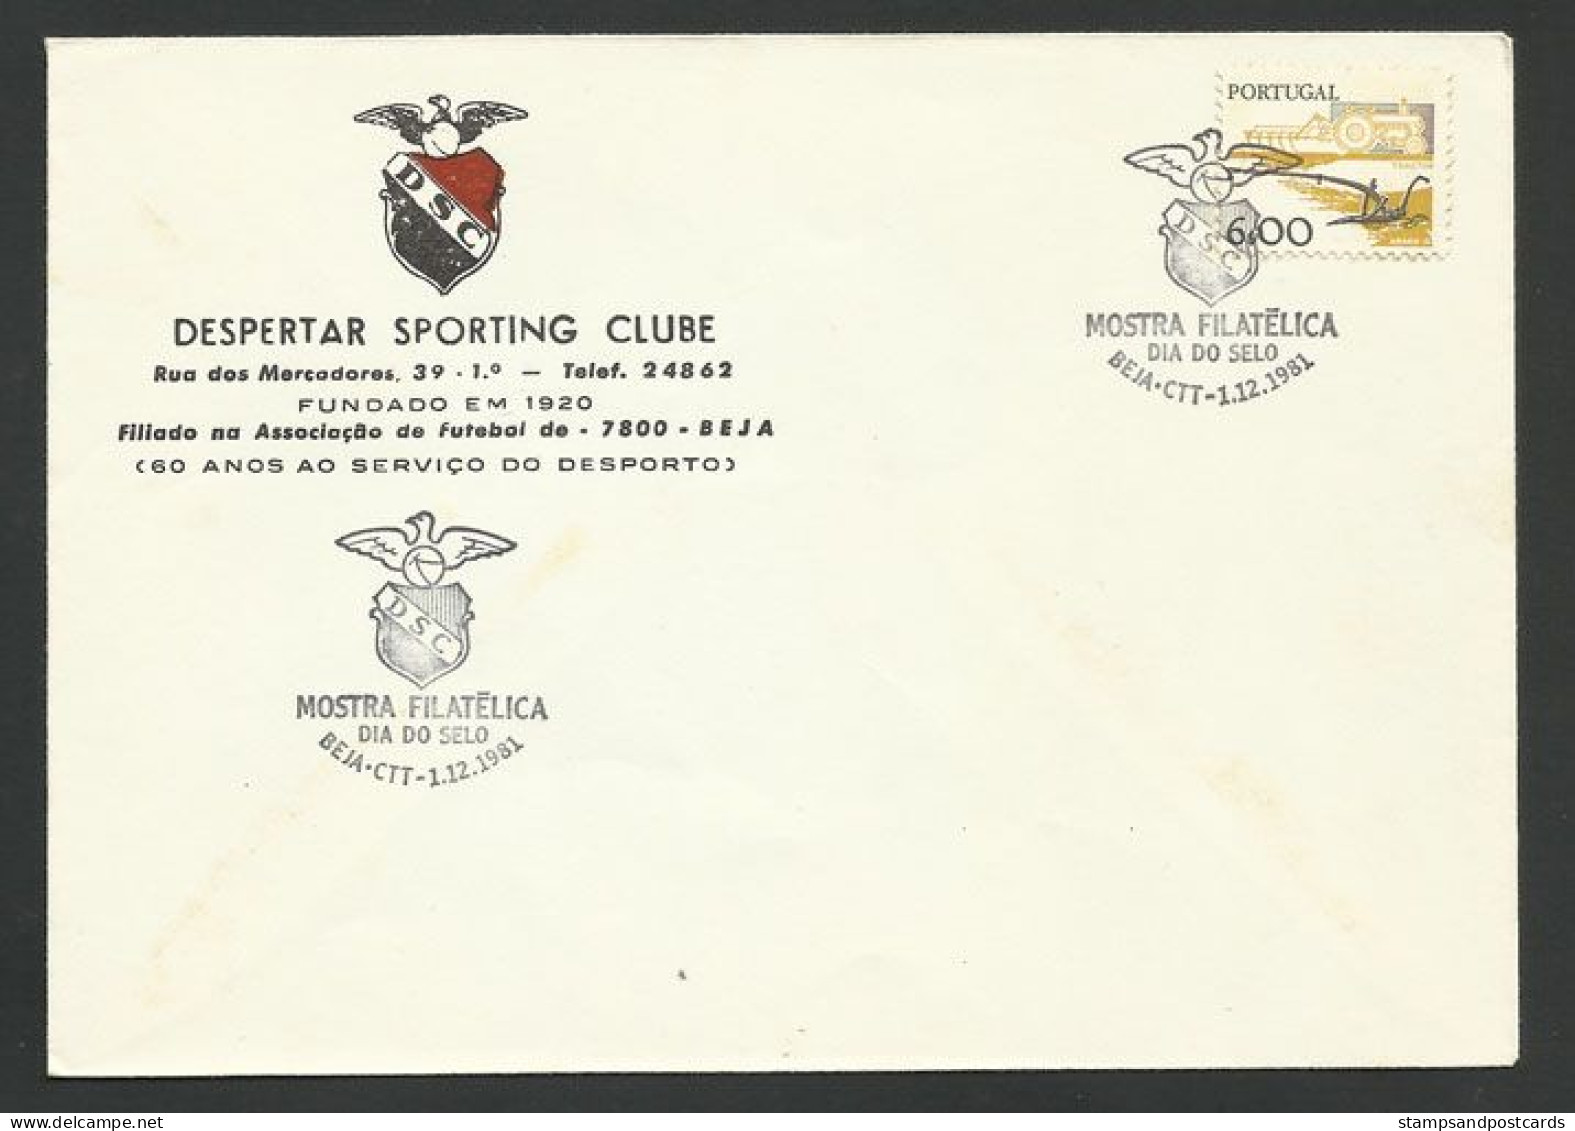 Portugal Cachet Commémoratif  Journée Du Timbre Expo Philatelique Beja 1981  Event Postmark Stamp Day - Postembleem & Poststempel